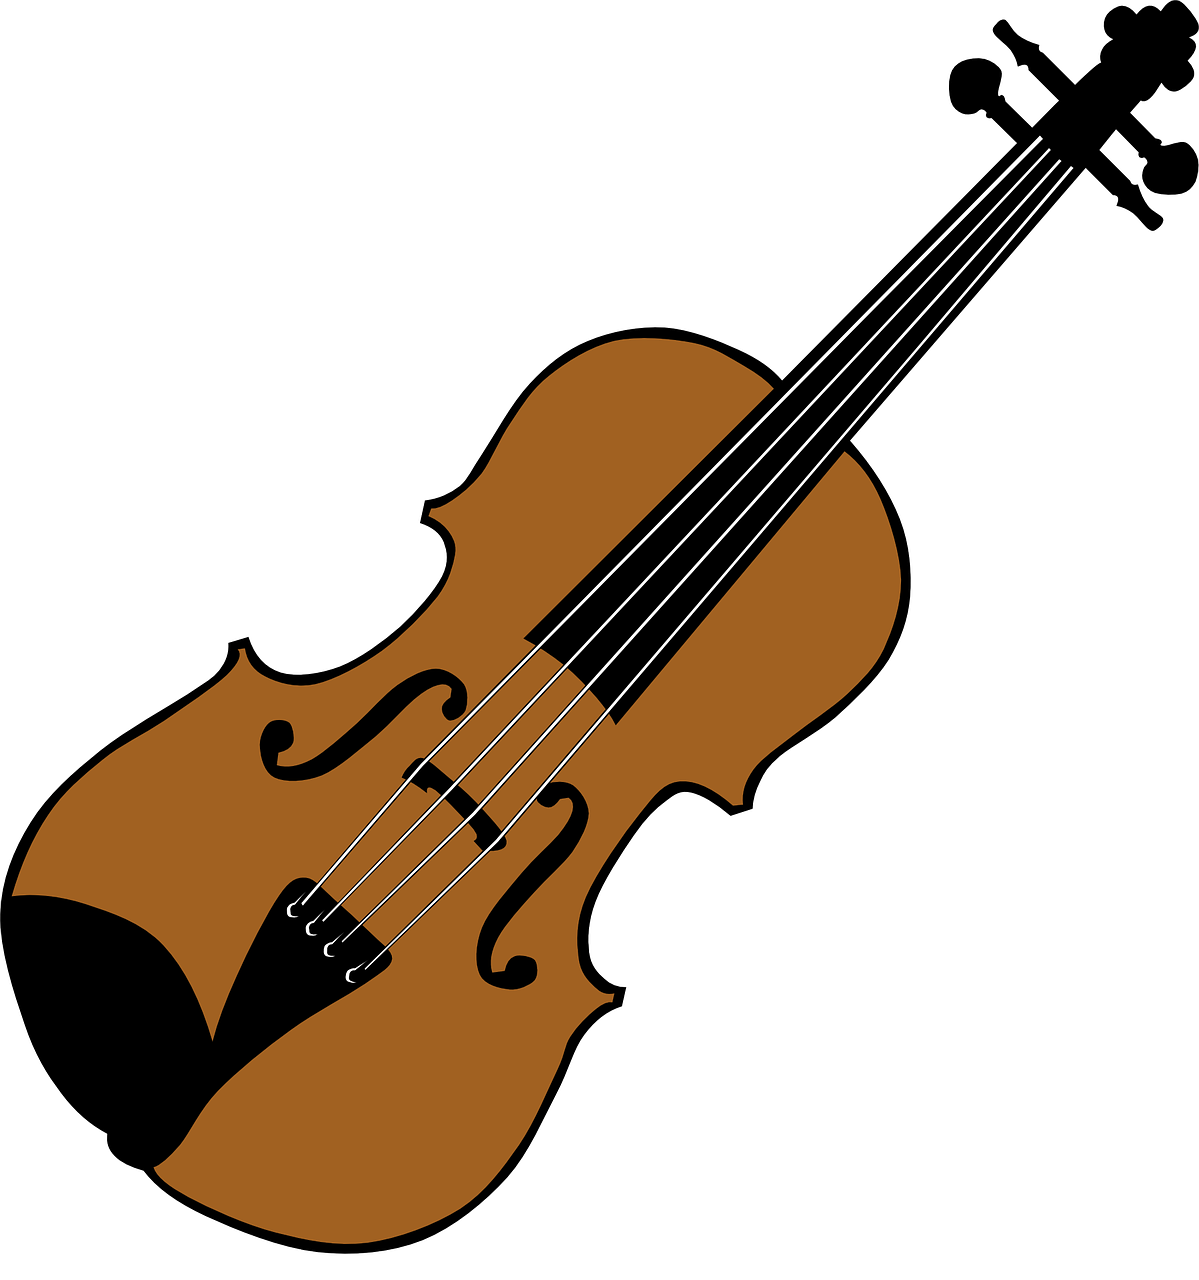 Classic Violin Illustration PNG image